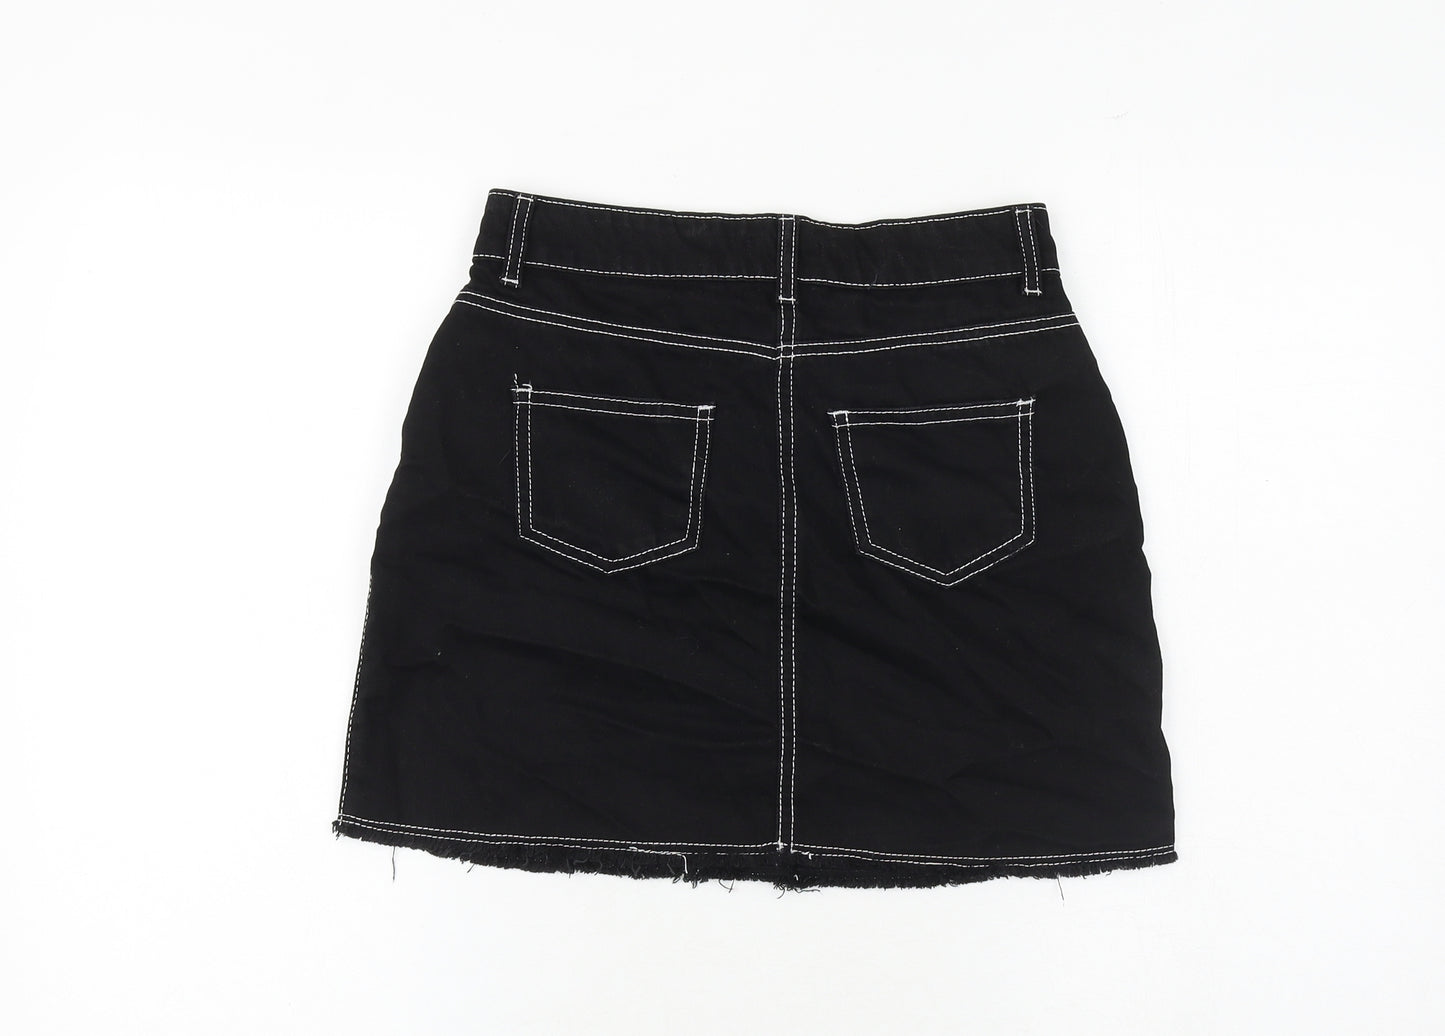 M&Co Girls Black 100% Cotton A-Line Skirt Size 13 Years Regular Zip